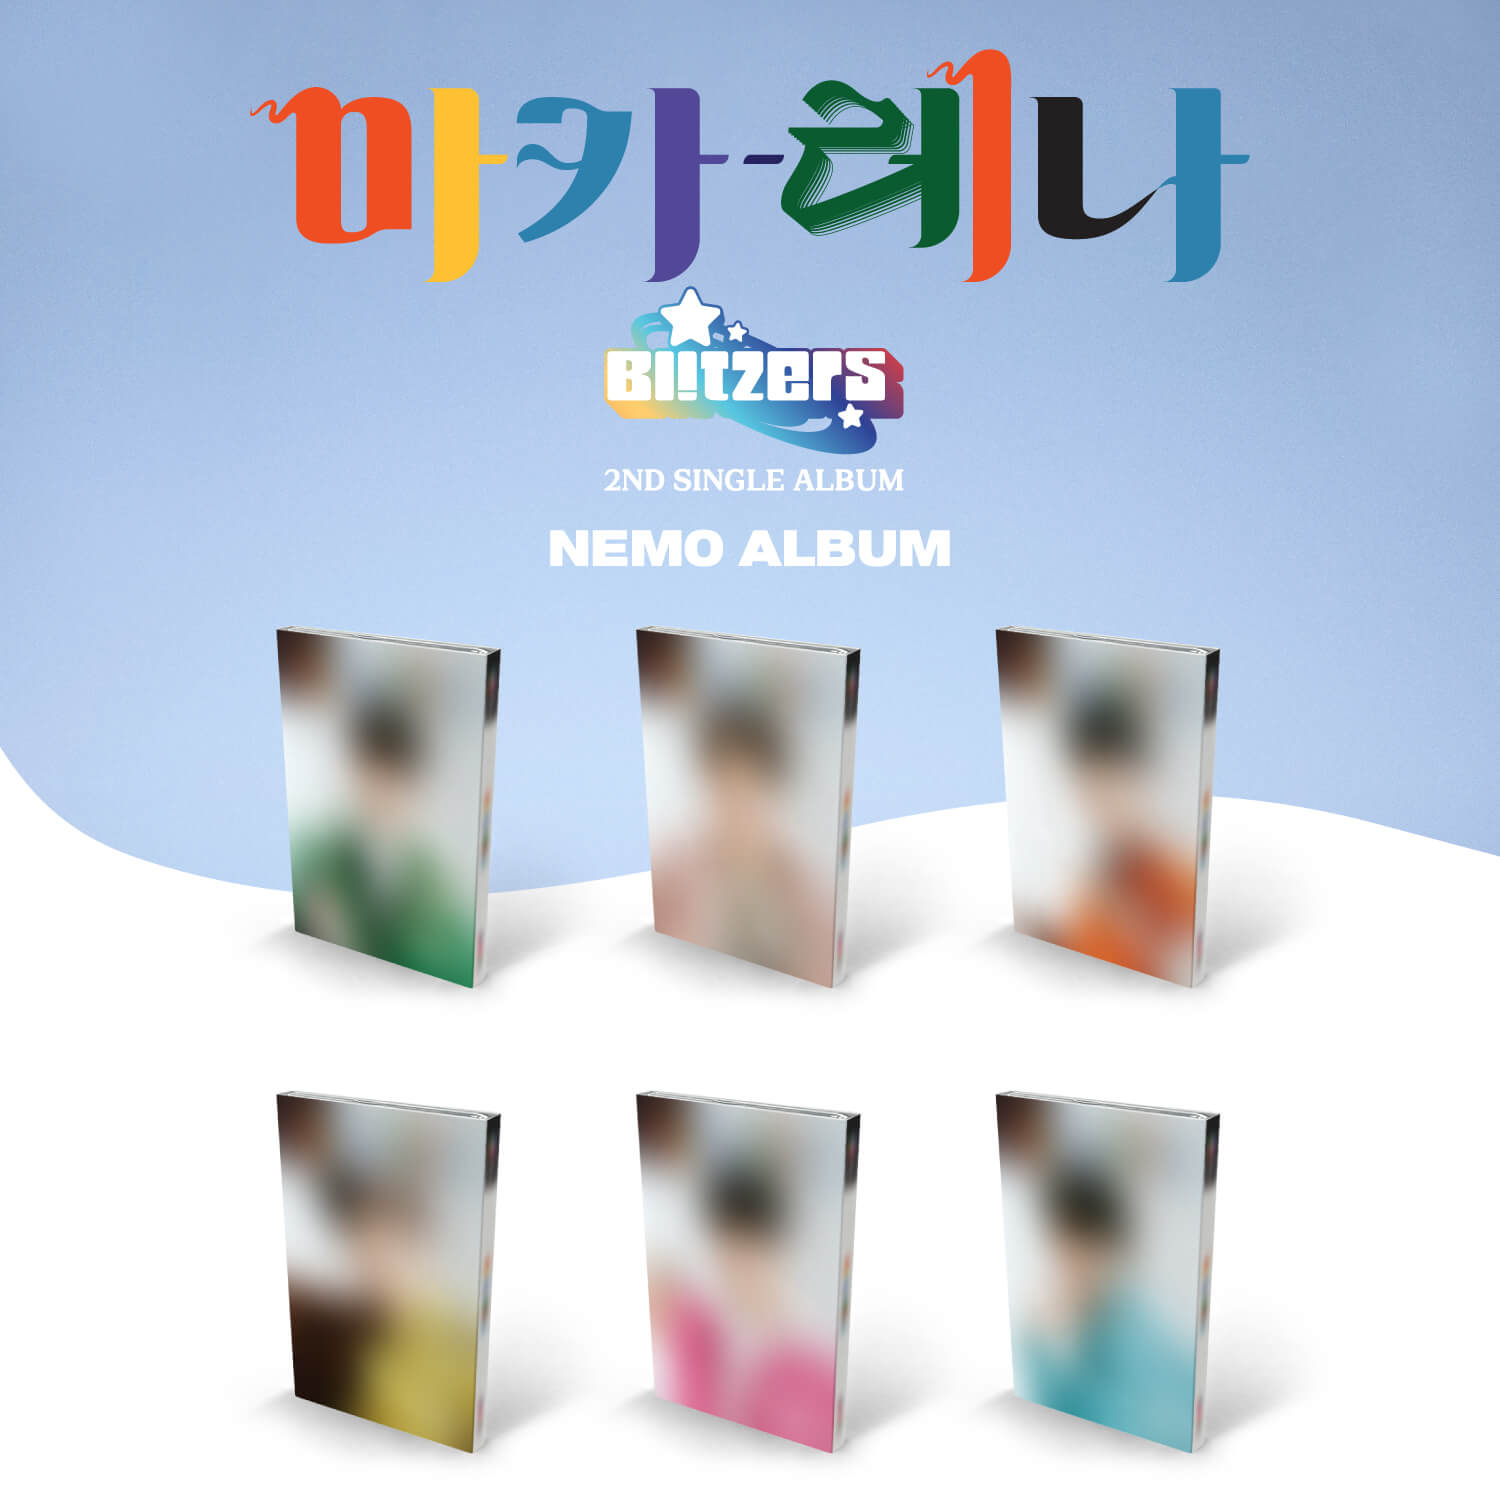 BLITZERS 2nd Single Album Macarena - Nemo Album Version